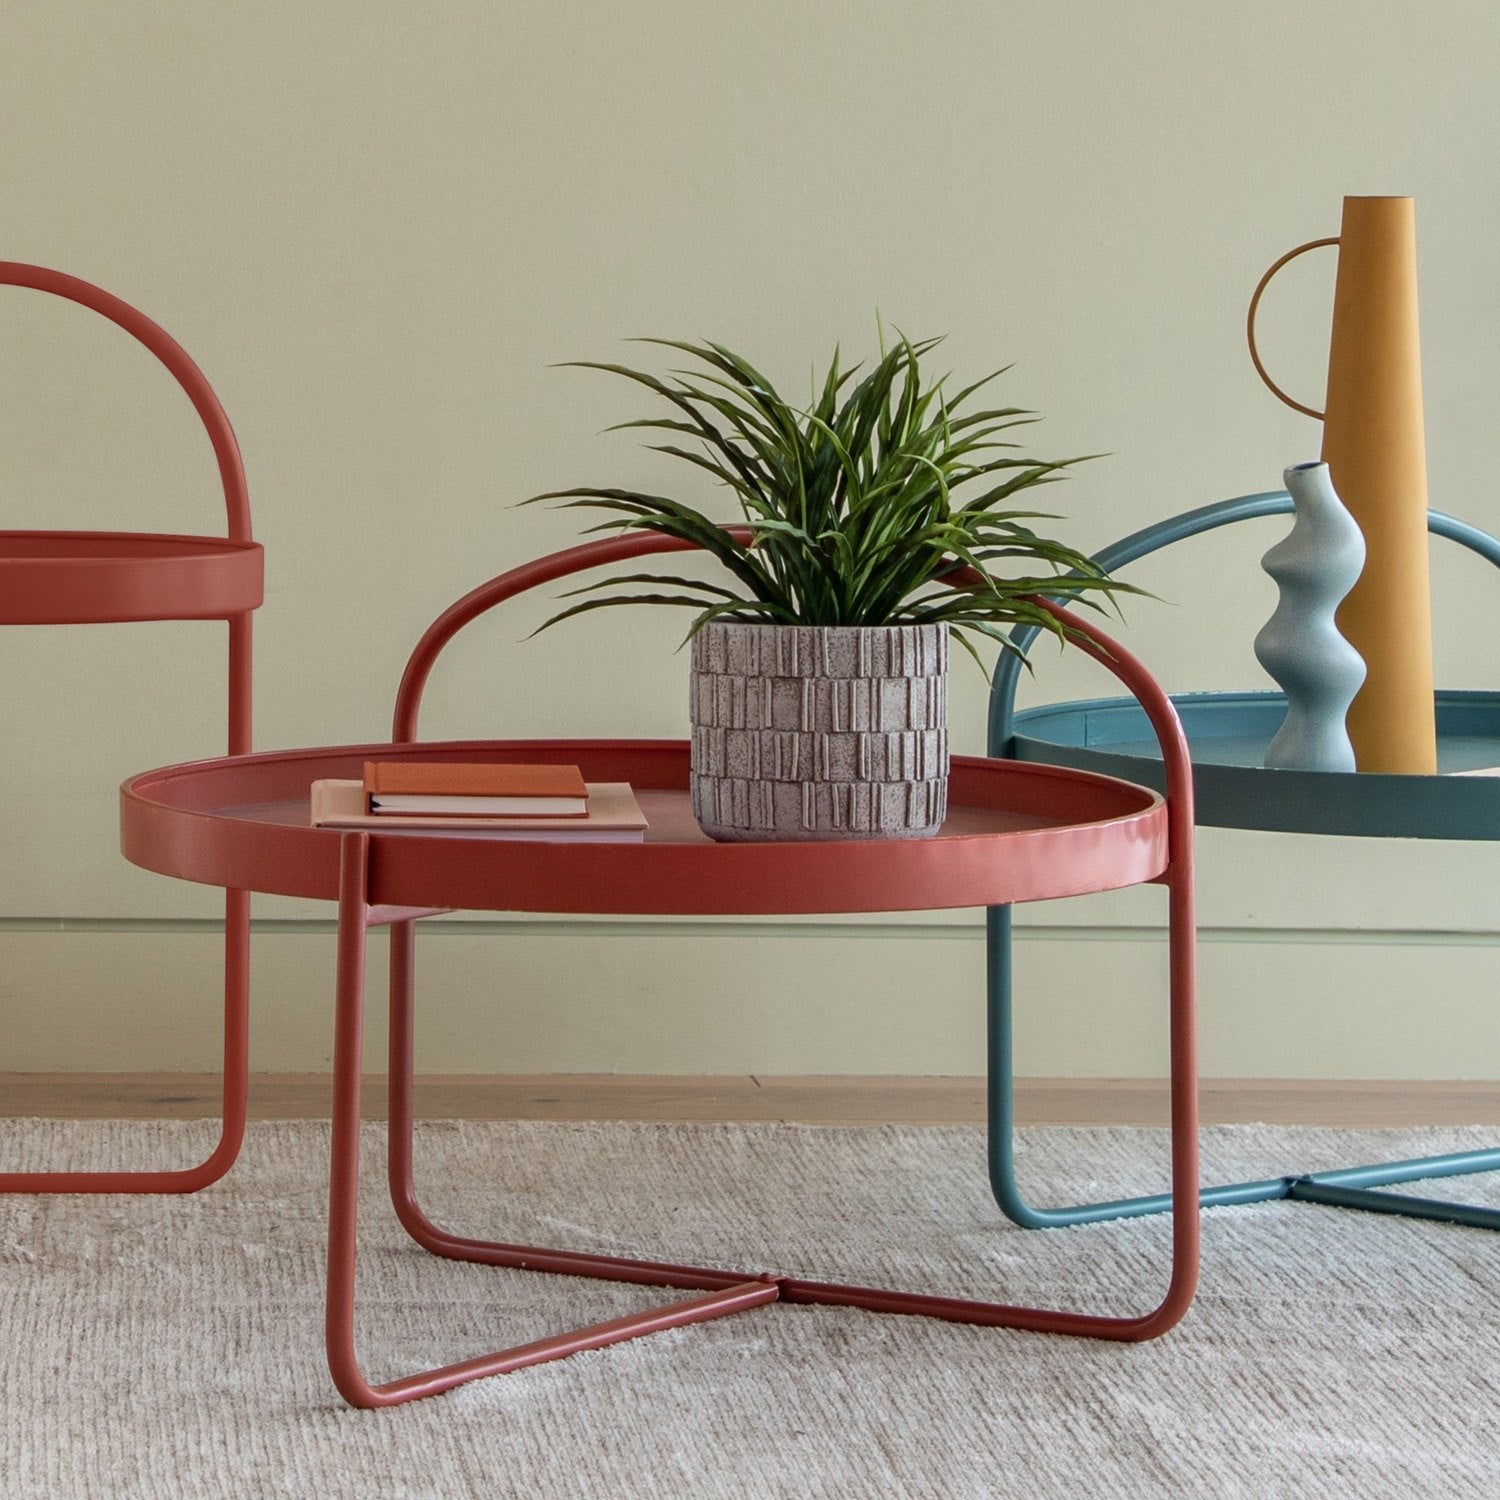 Brighton Coffee Table - Colourful Iron Design - Tray Top